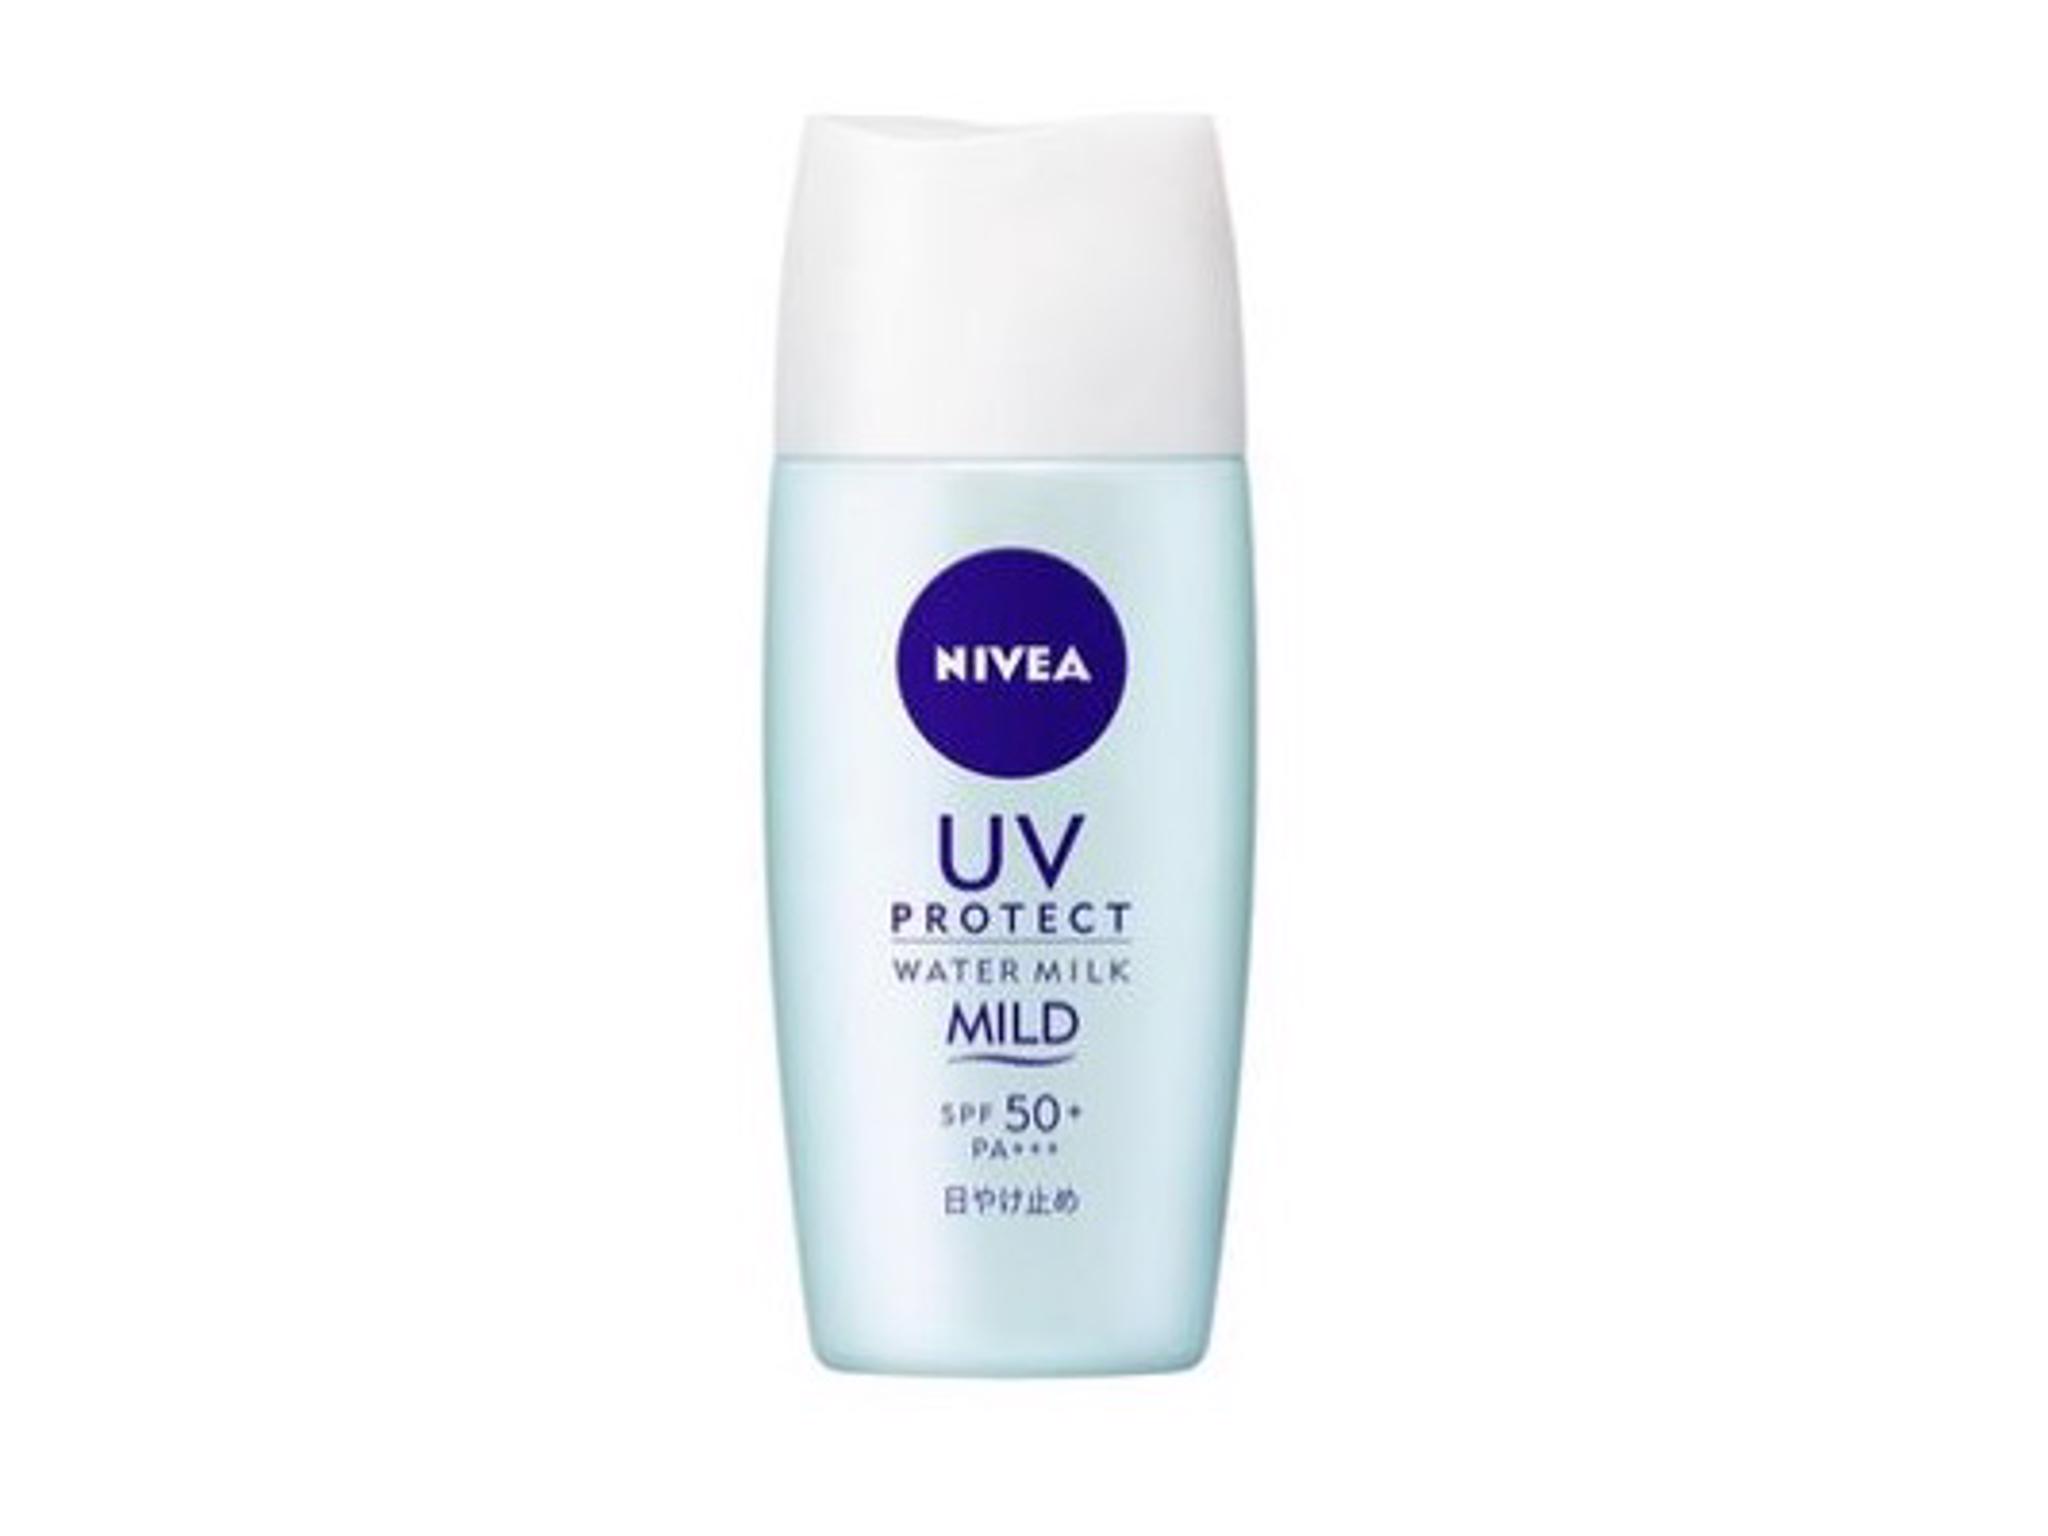 NIVEA - UV Protect Water Milk Mild - SPF50+/PA+++ 30ml 3639